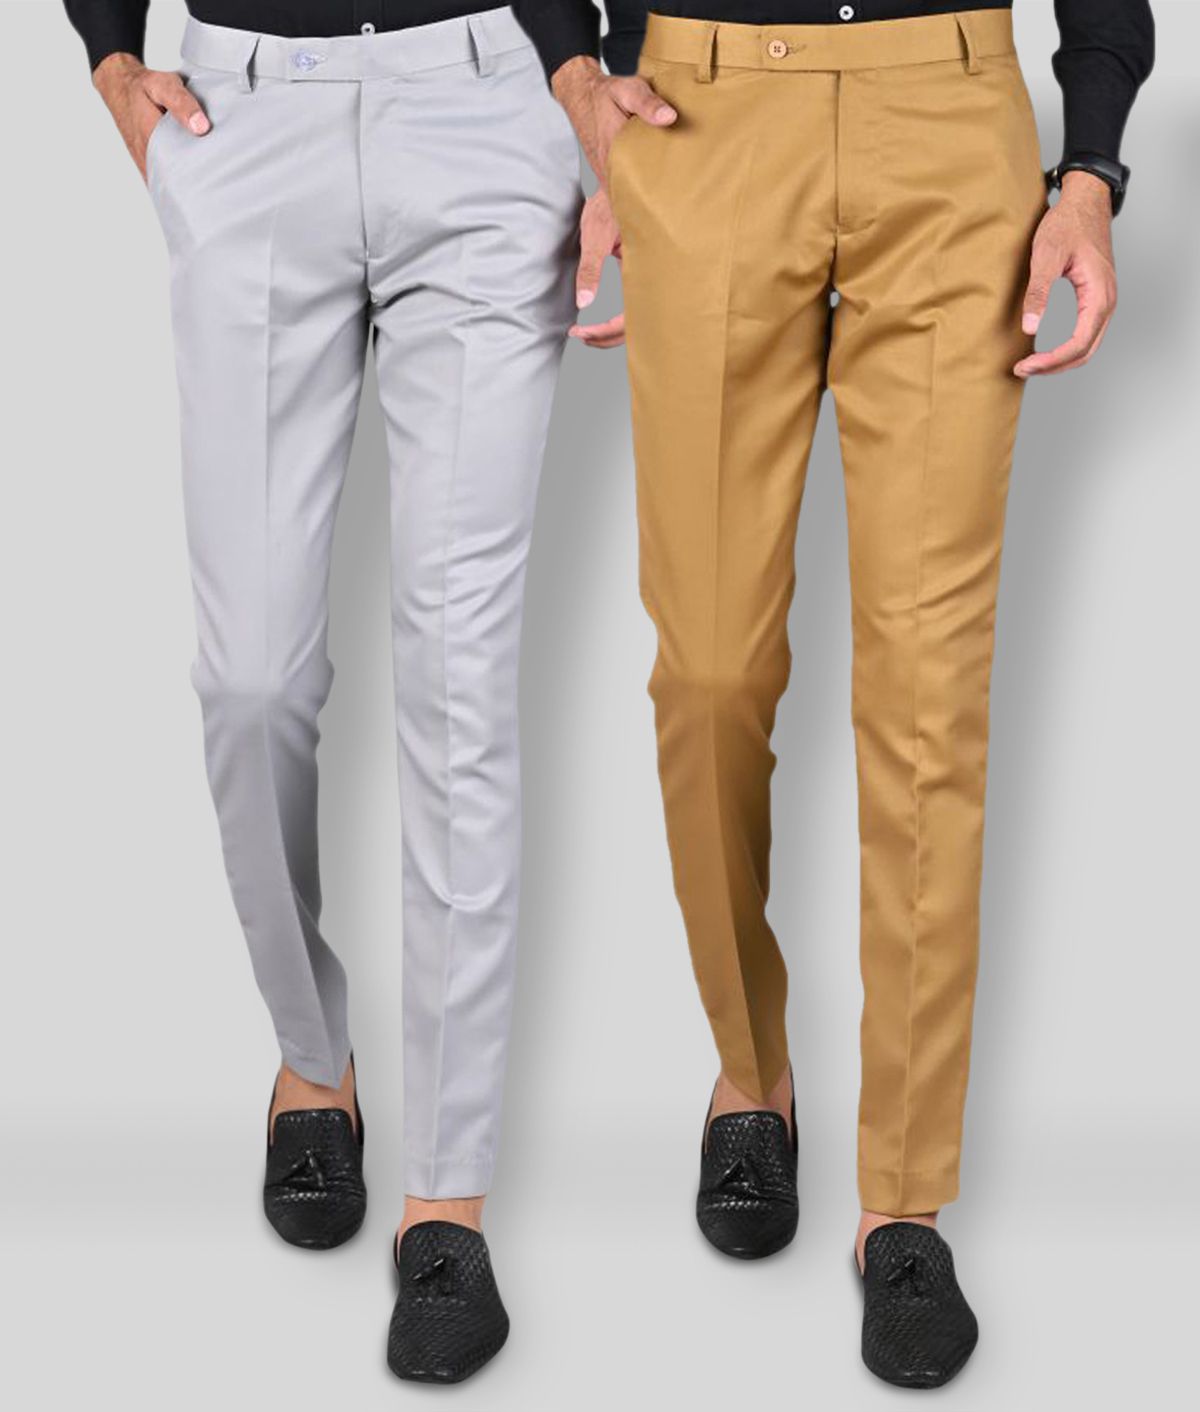 MANCREW - Khaki Polycotton Slim - Fit Men's Formal Pants ( Pack of 2 )